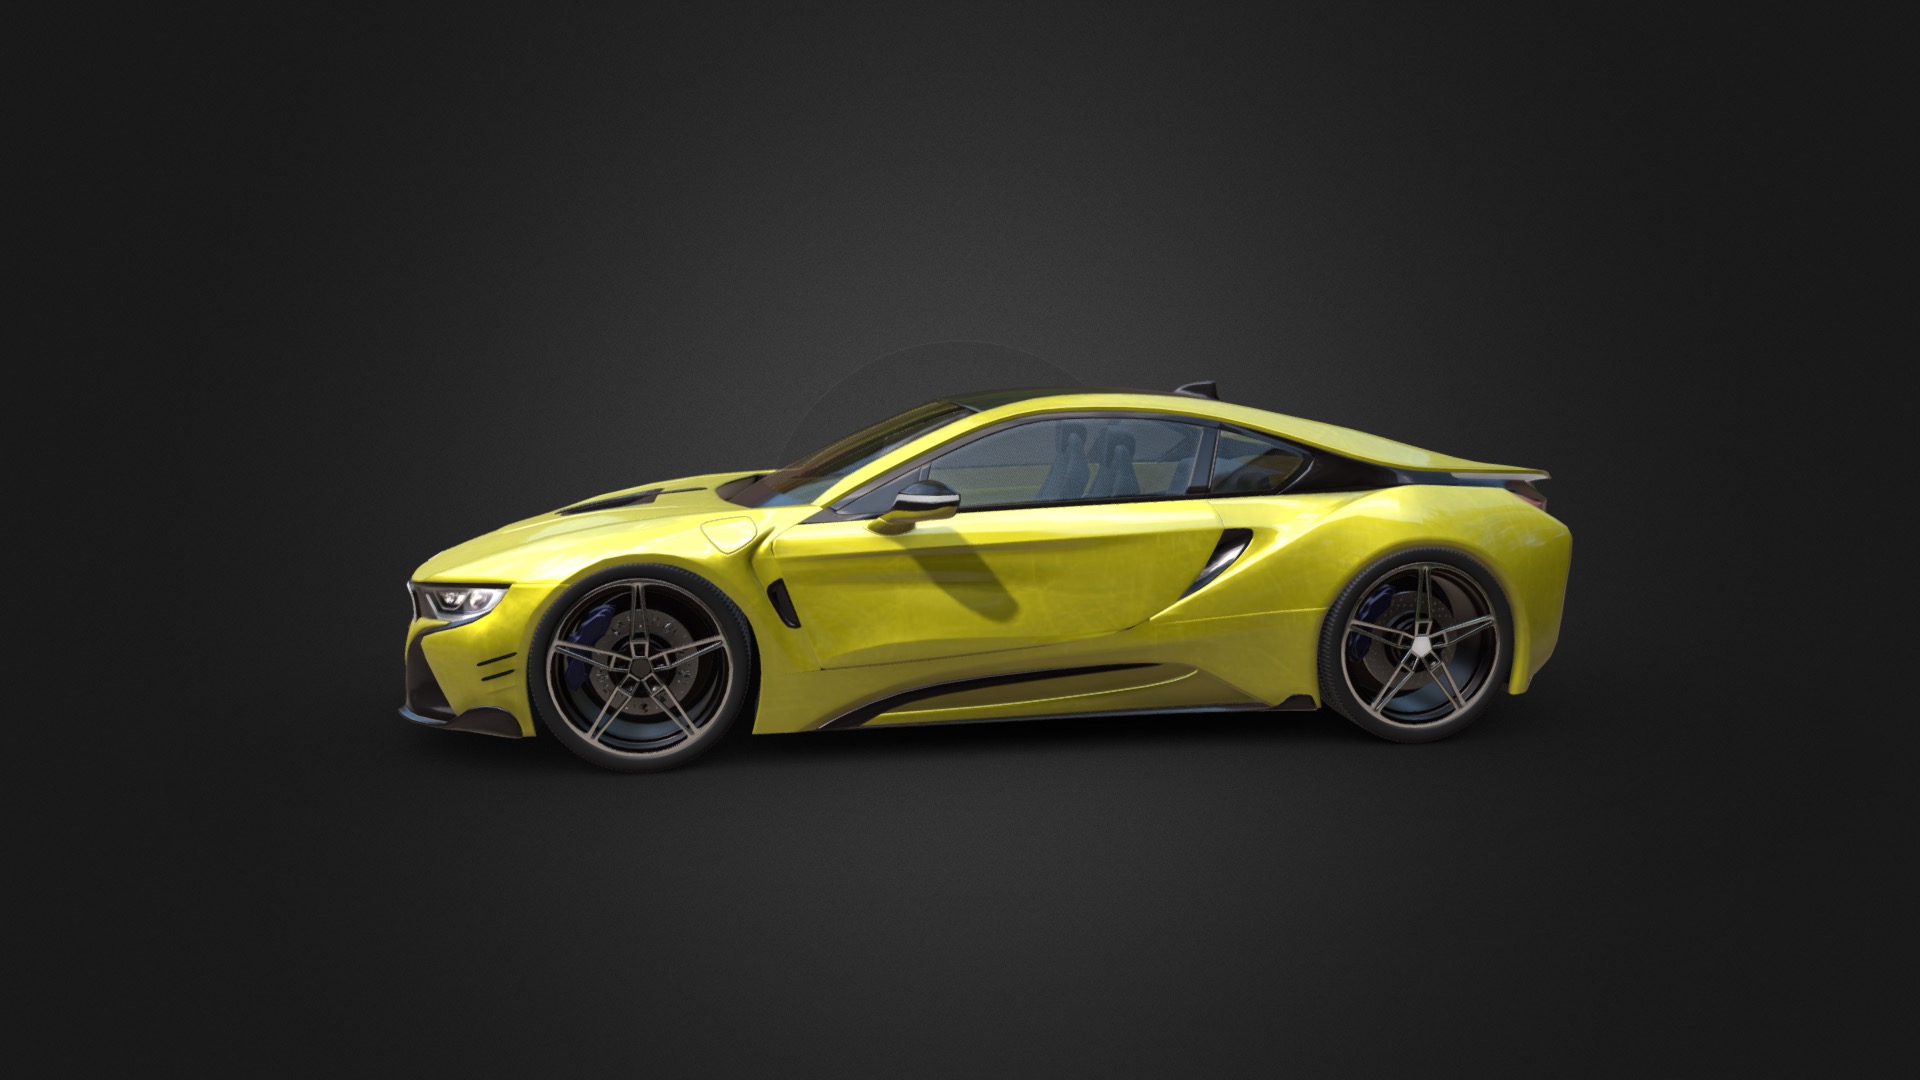 3D model Car modeling BMW i8 - This is a 3D model of the Car modeling BMW i8. The 3D model is about a yellow sports car.